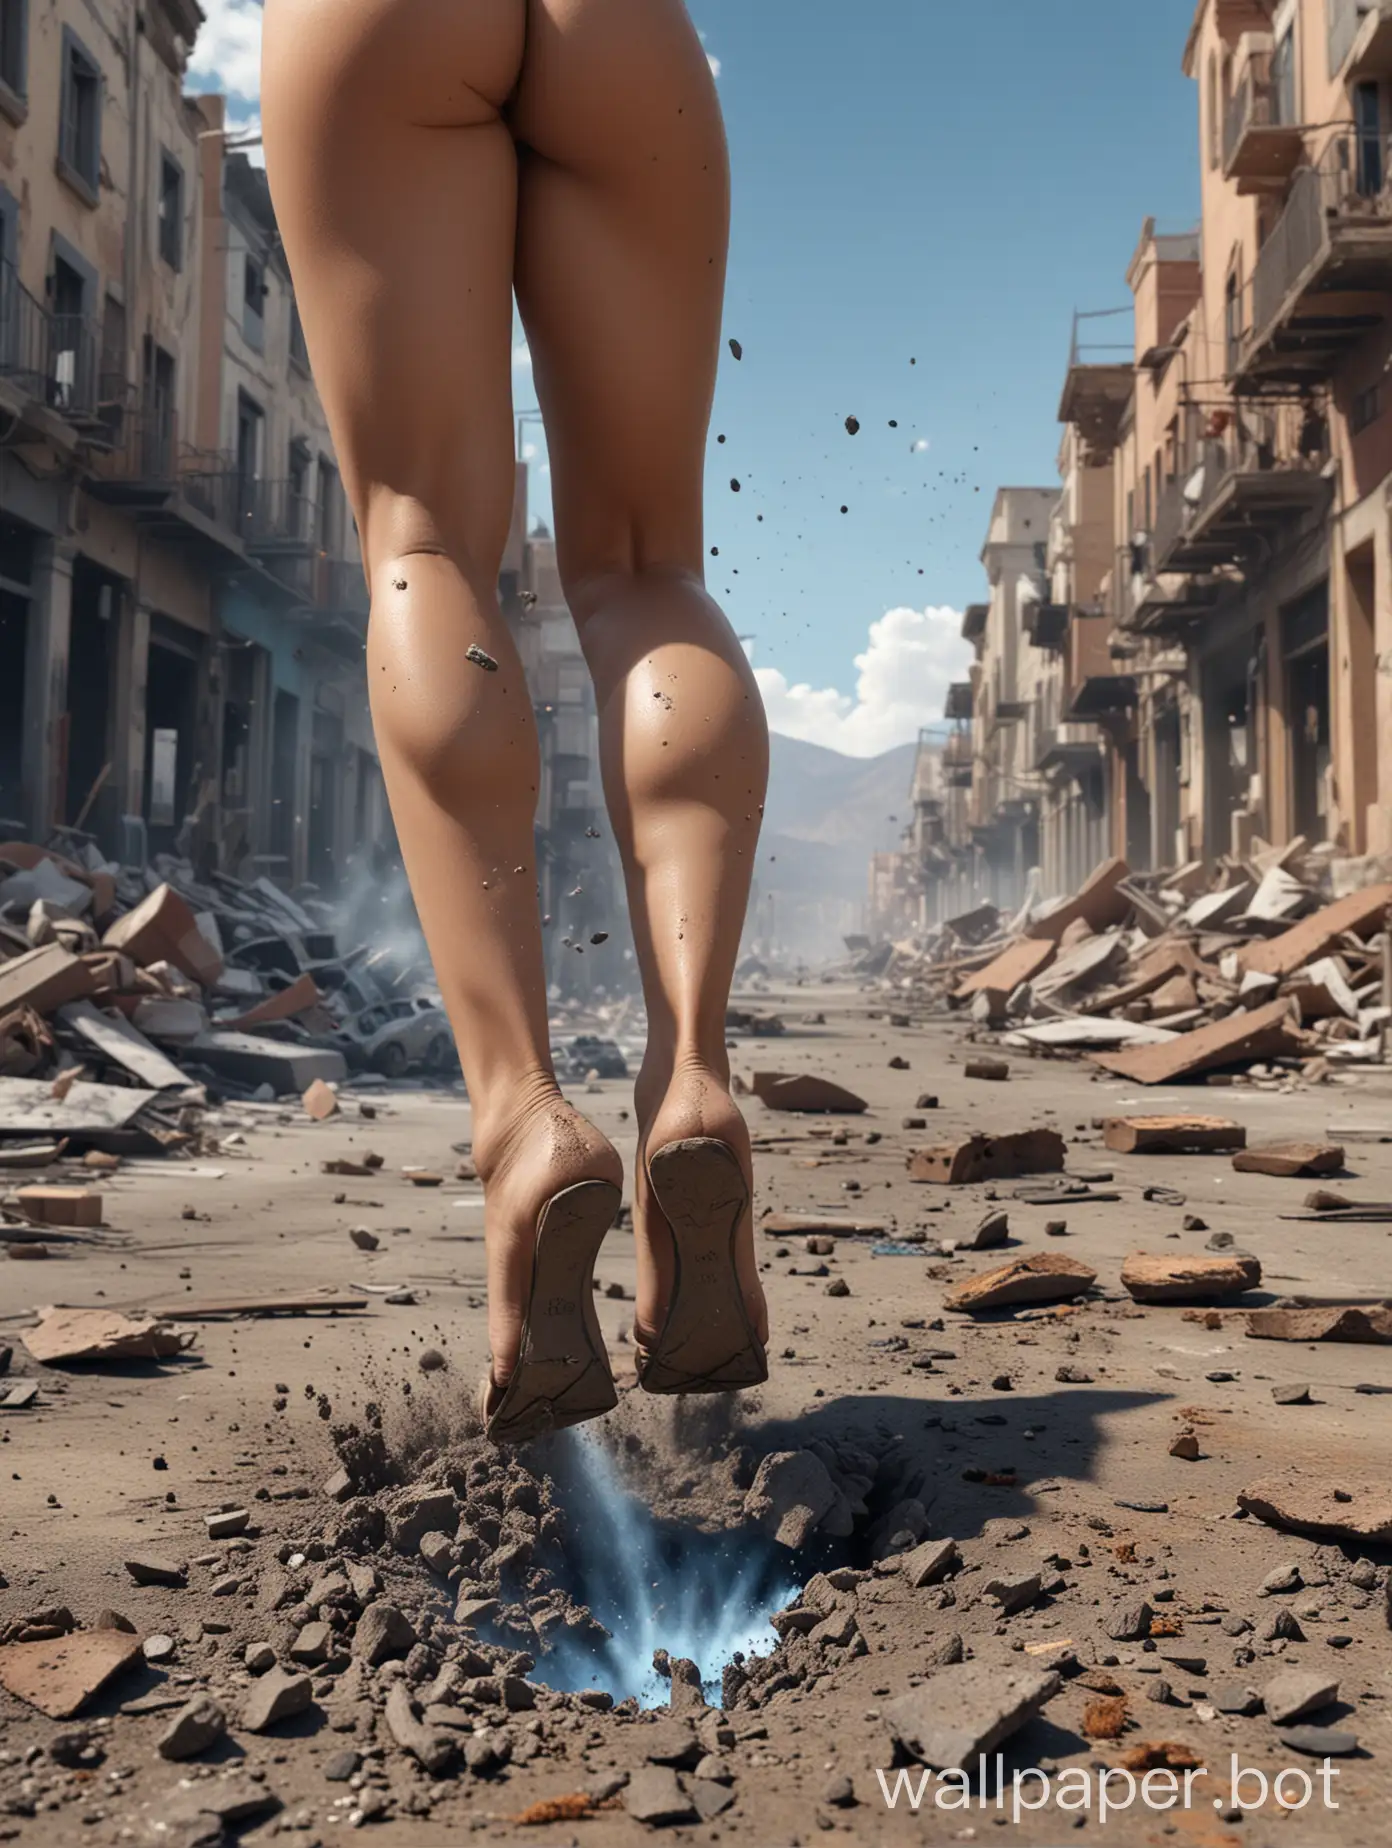 Giantess-Latina-Amidst-City-Devastation-Epic-Destruction-Scene